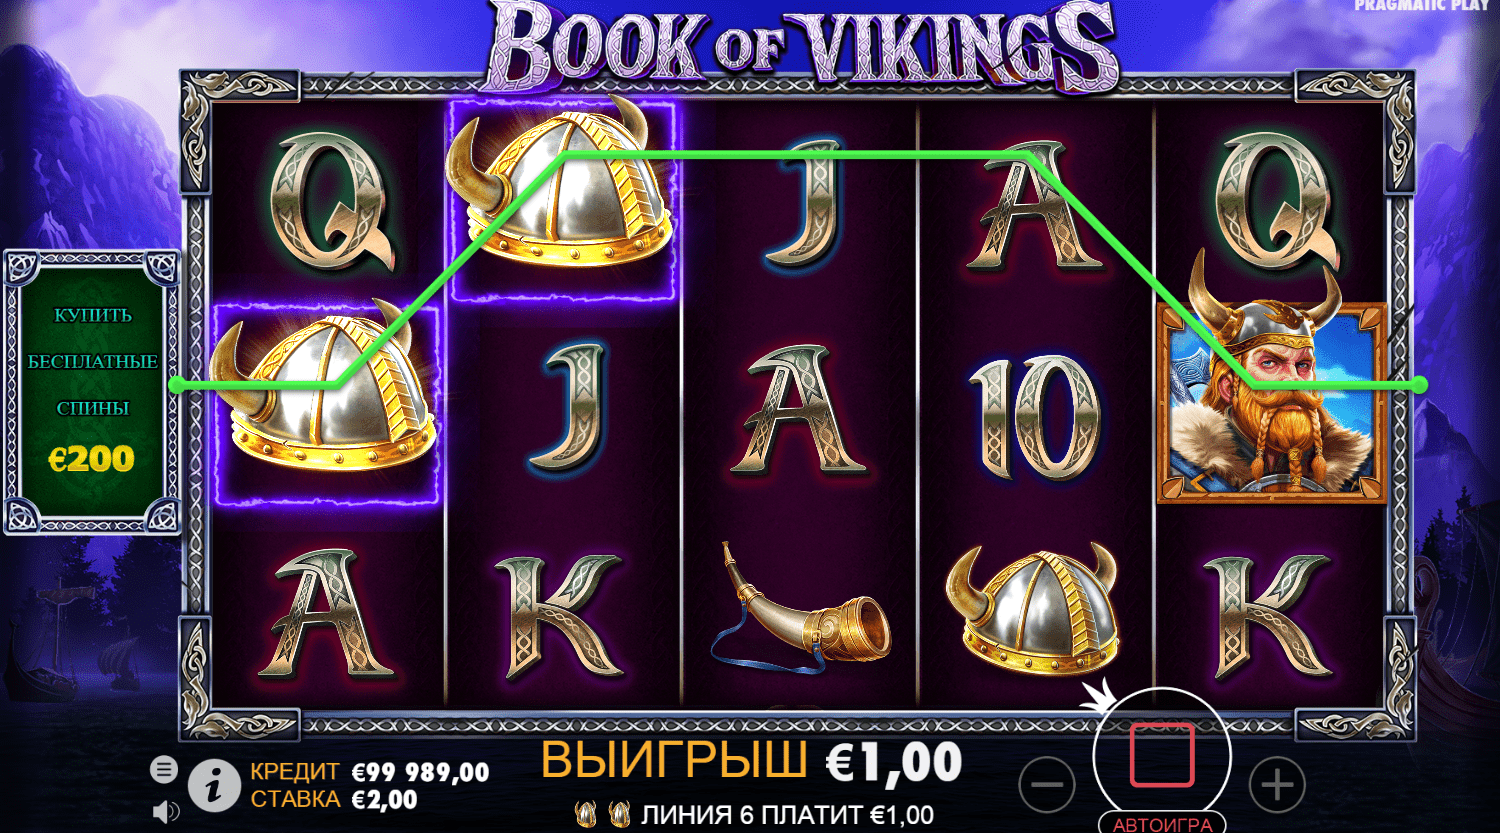 Book of Vikings jouer gratuitement